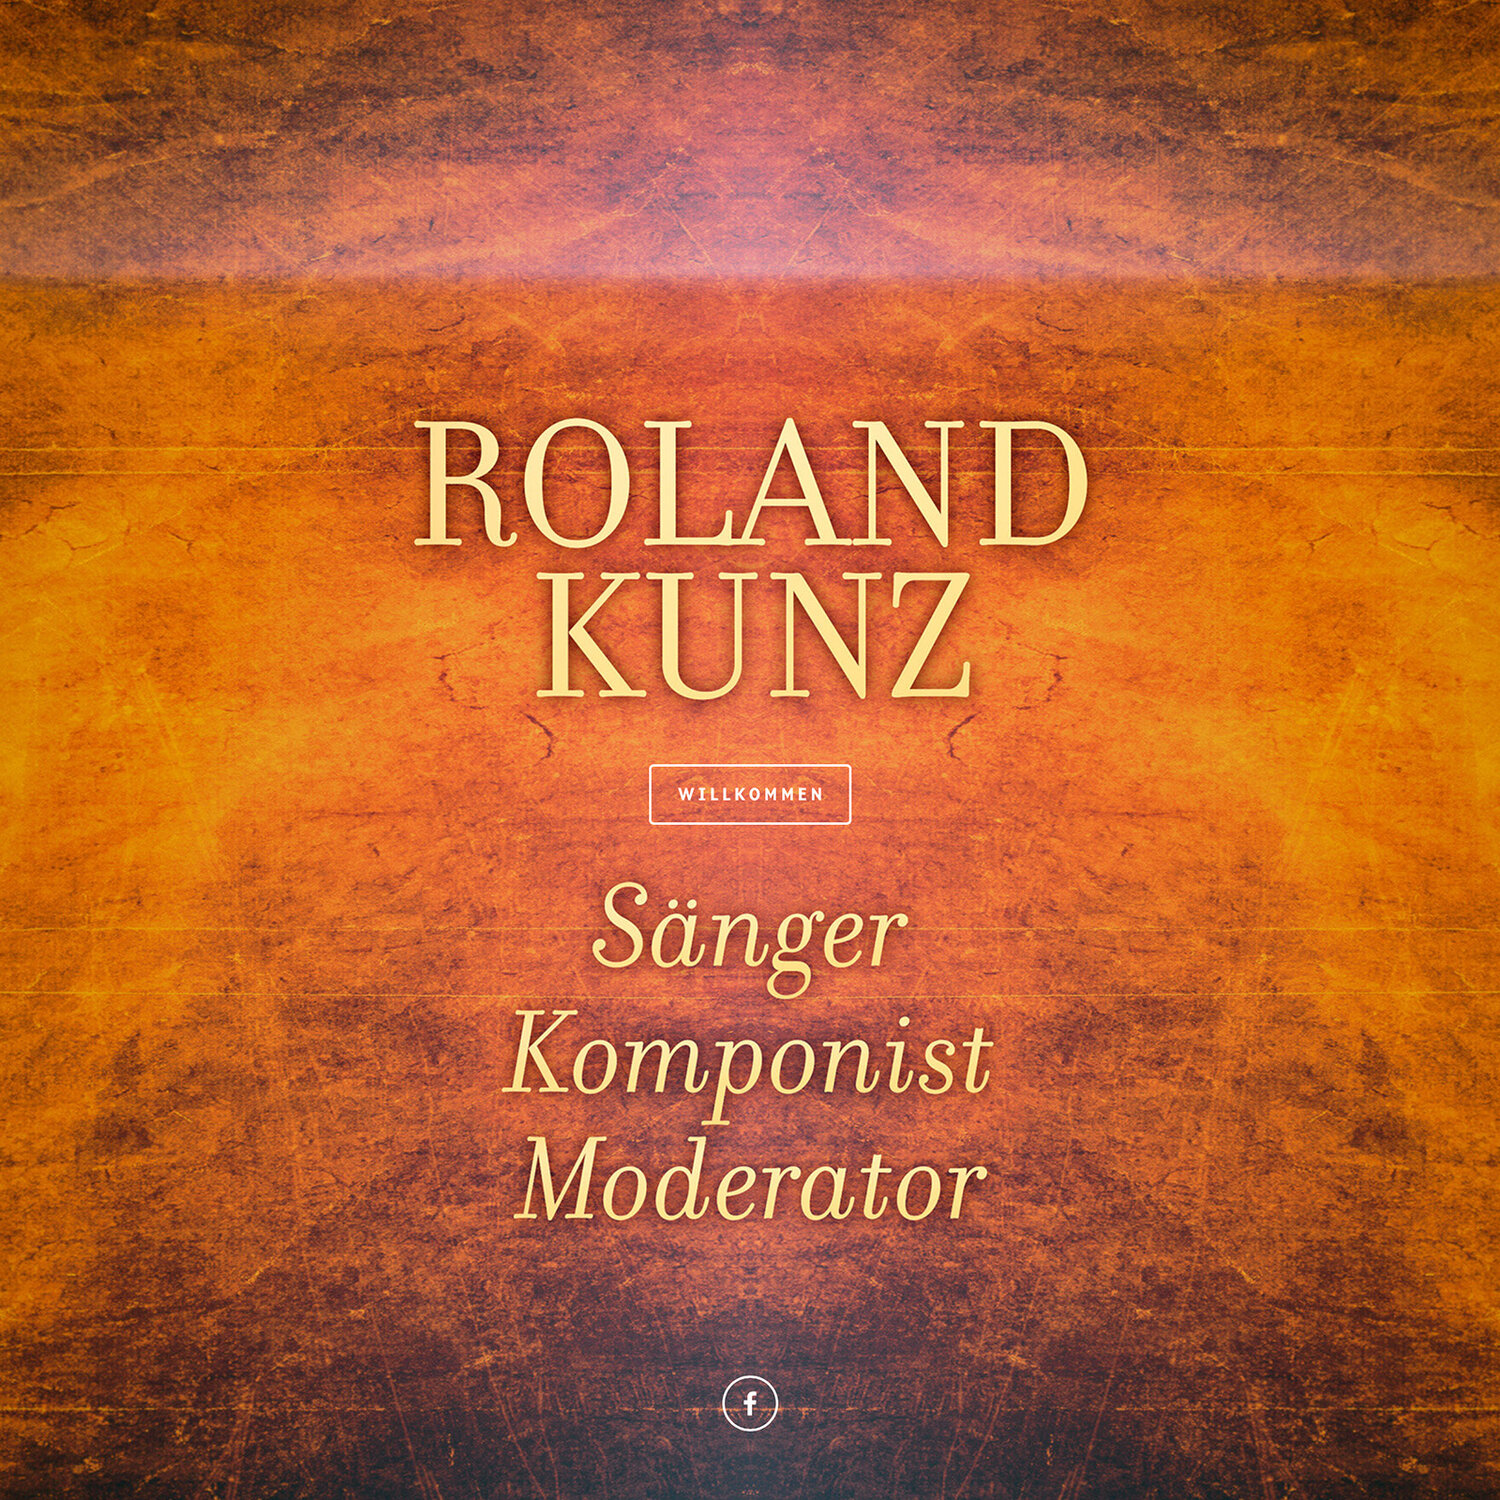 (c) Rolandkunz.com